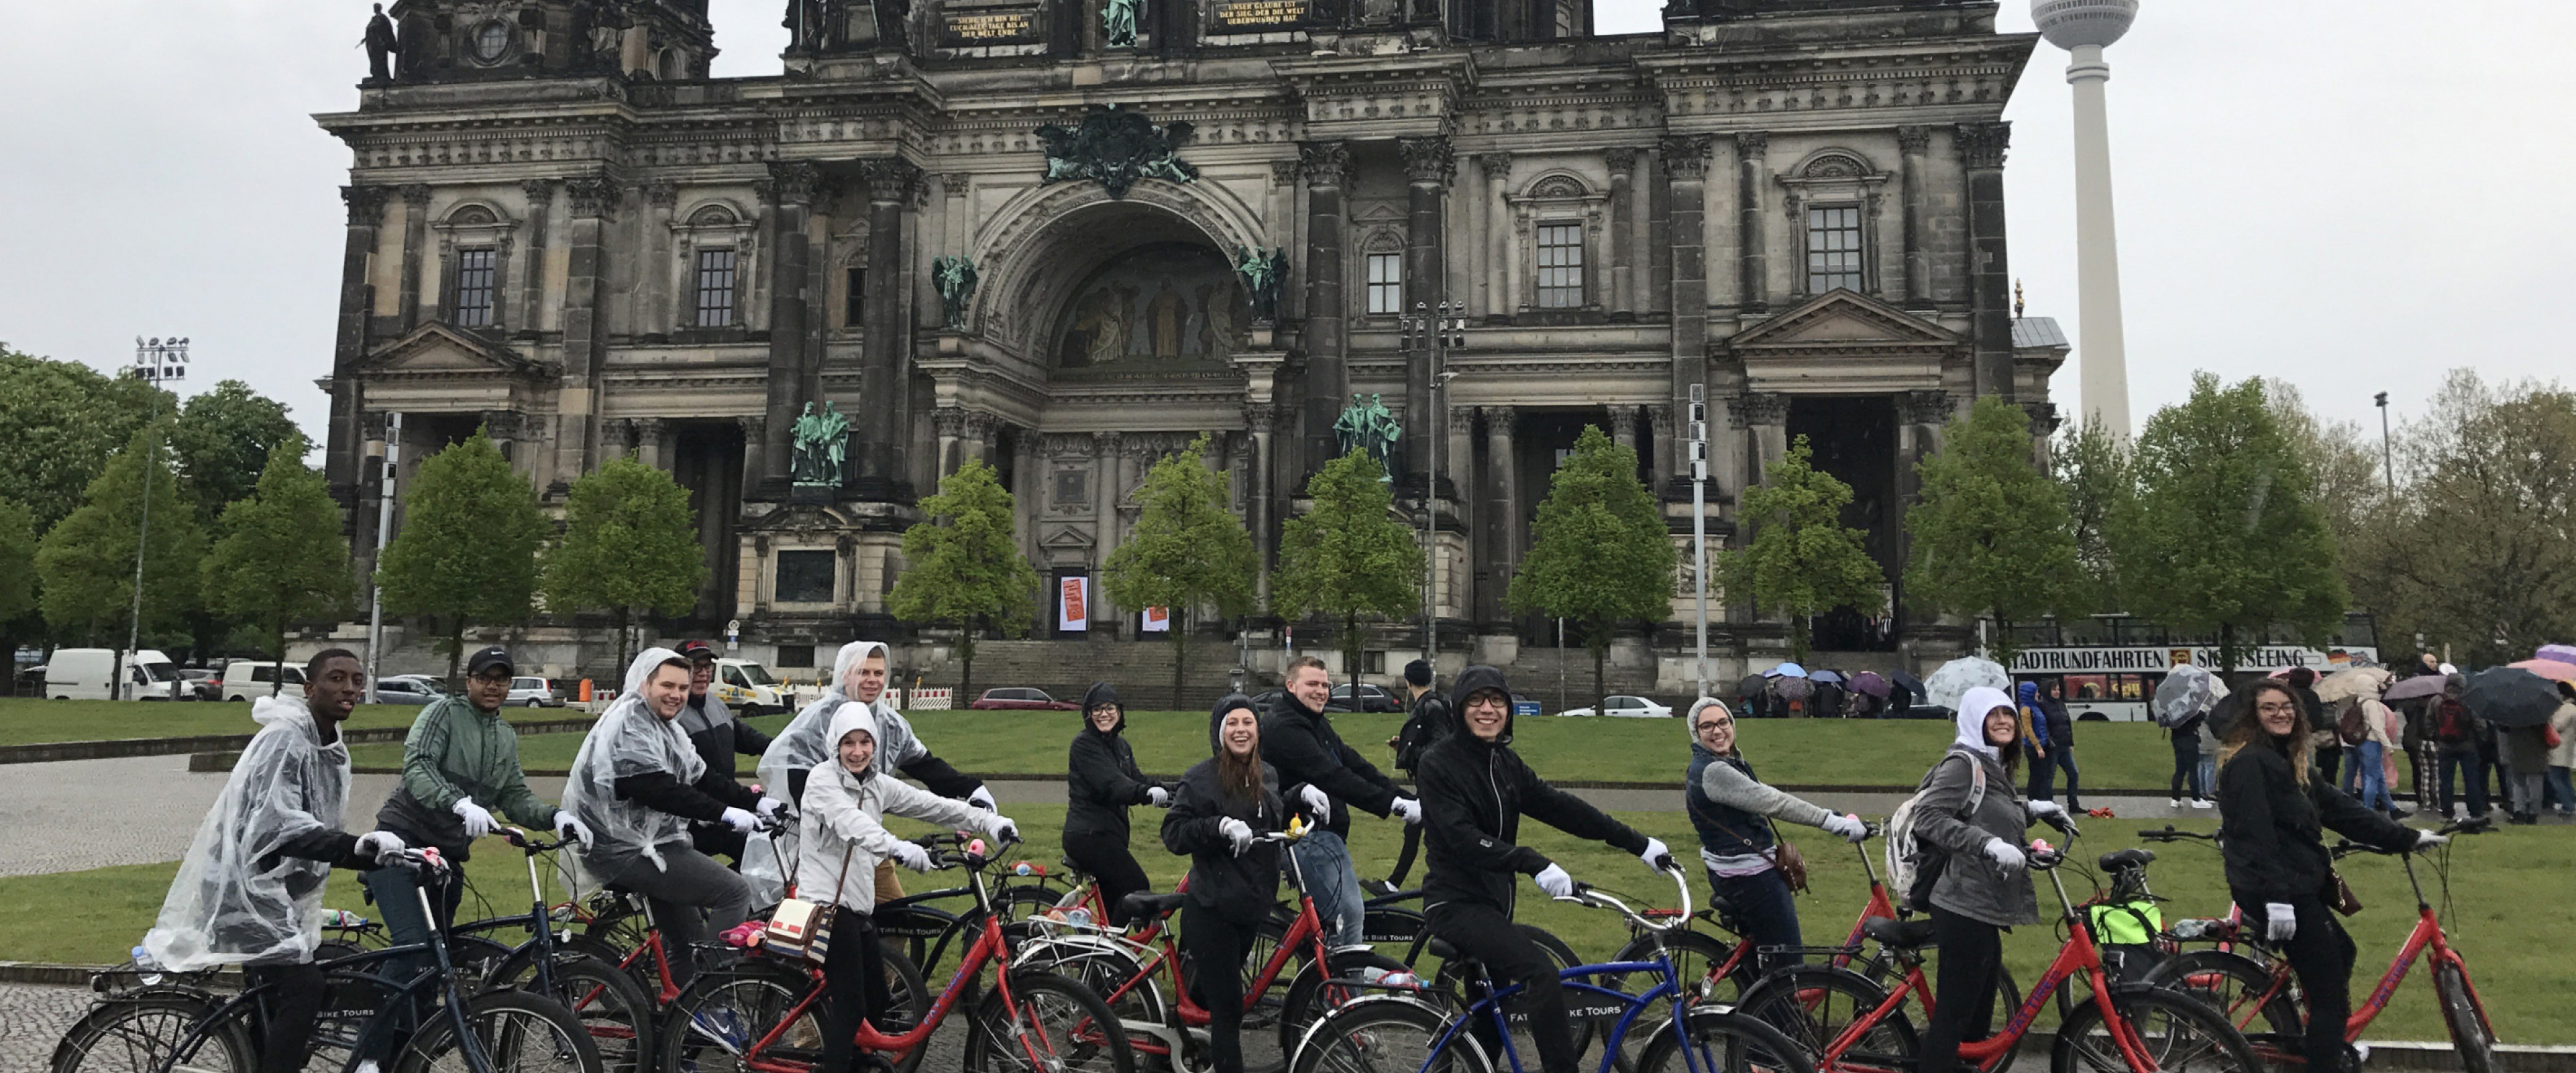 WMU student group biking in Germany